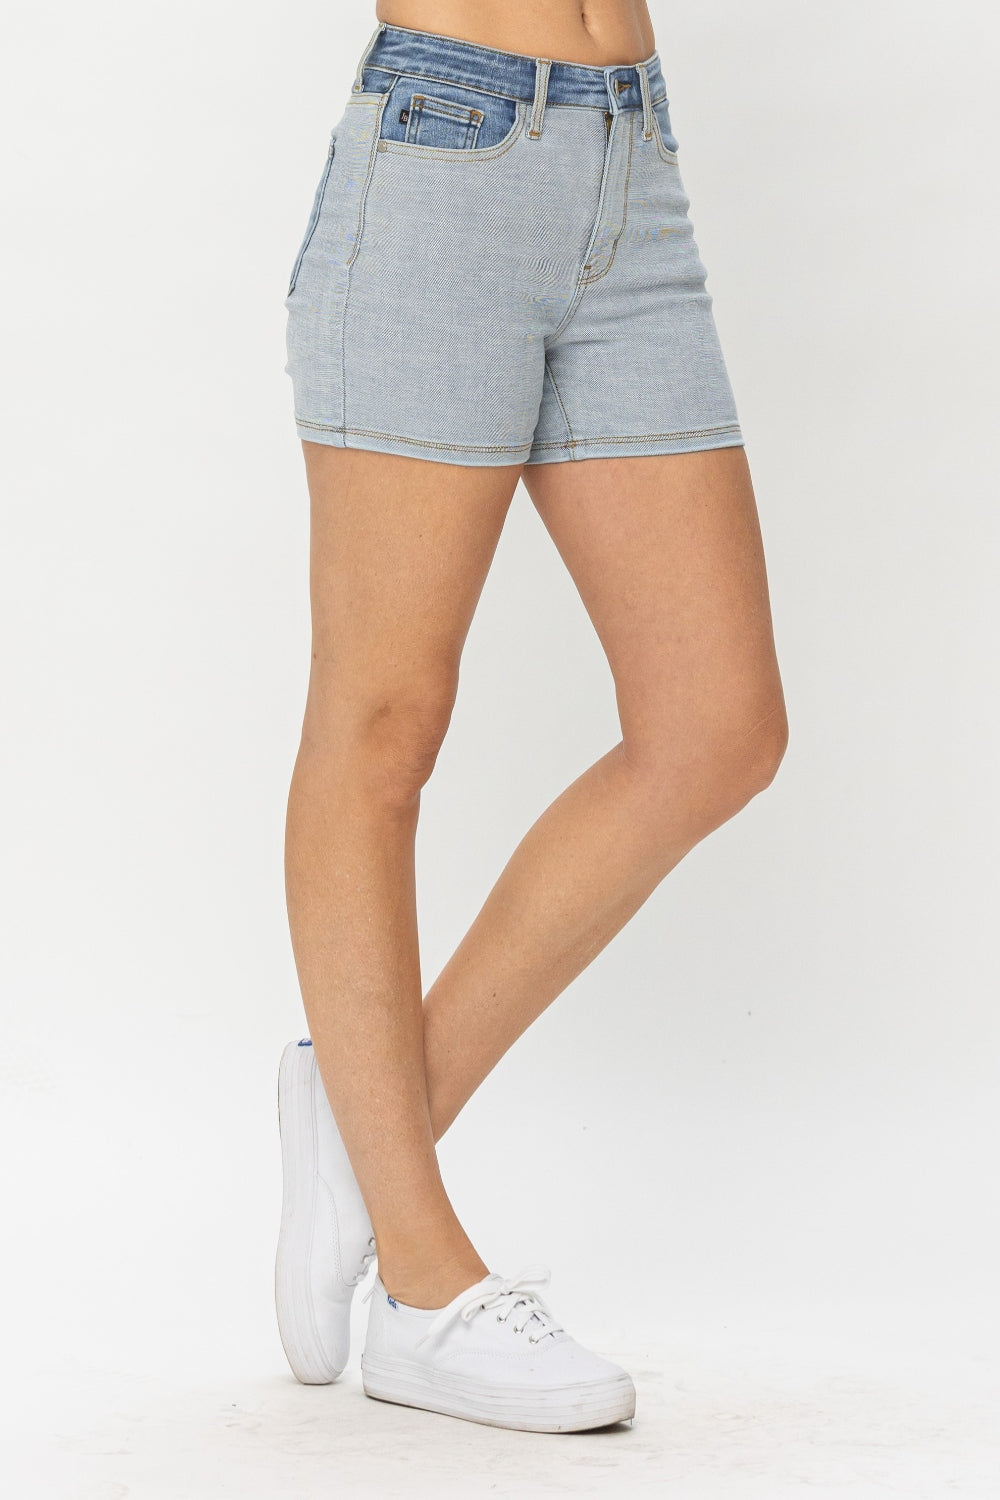 Judy Blue Full Size Color Block Denim Shorts - Sybaritic Bags & Clothing